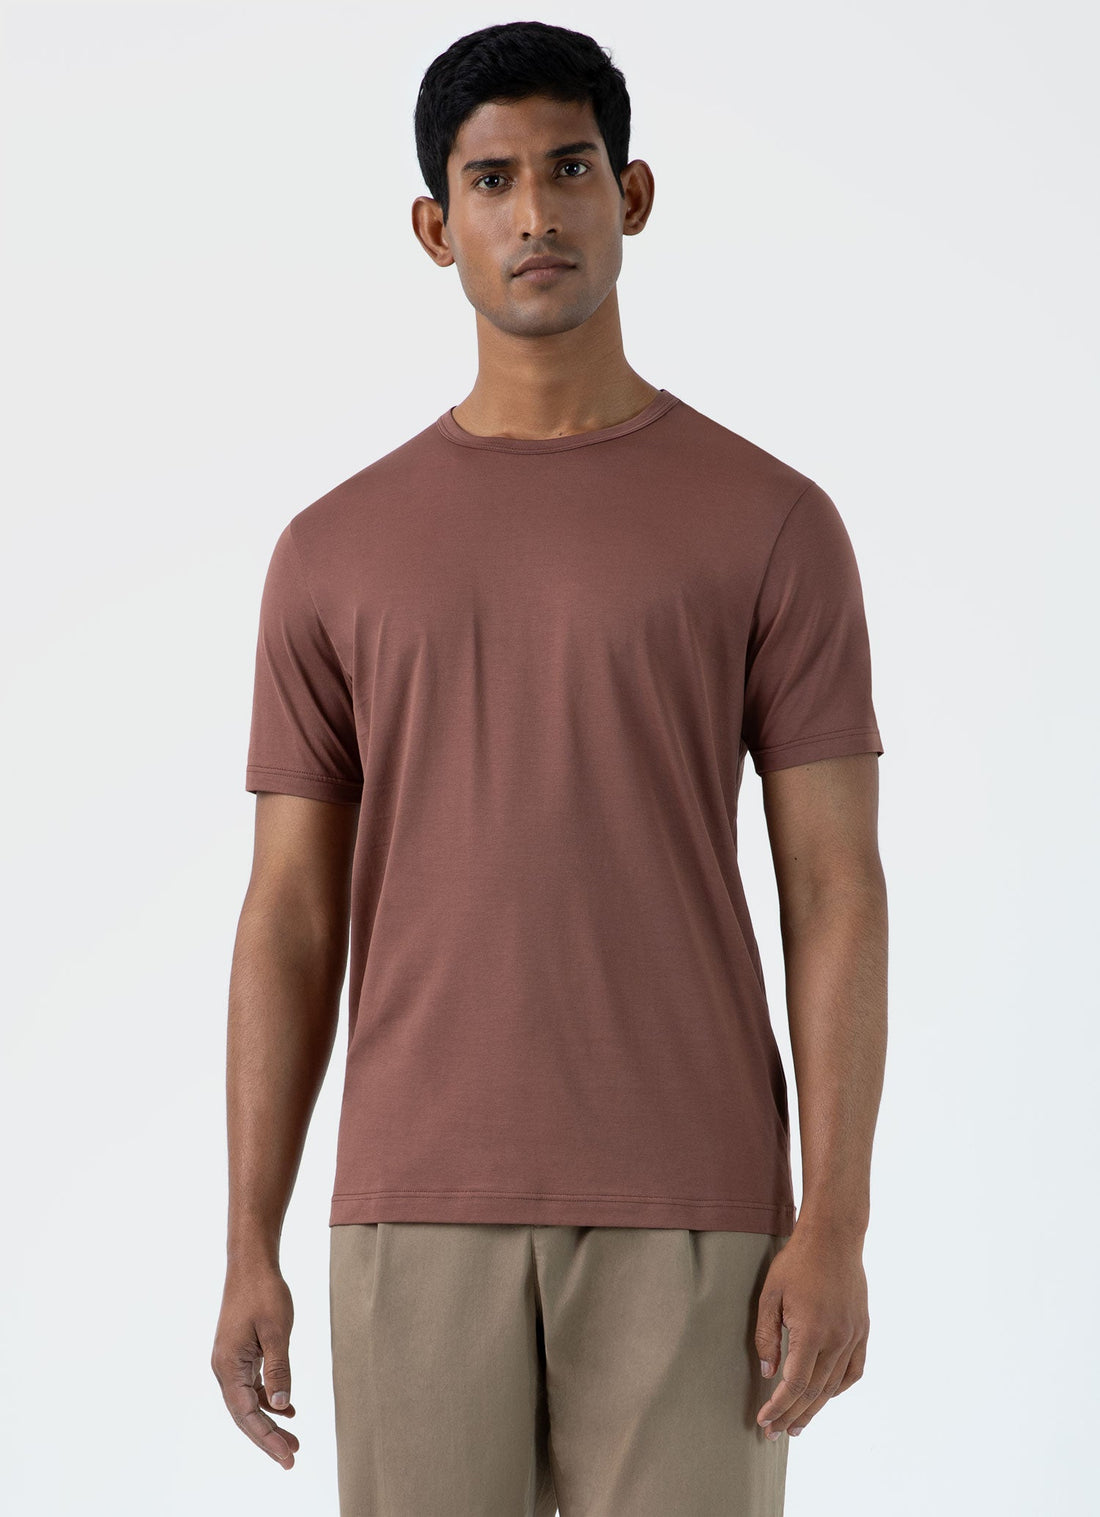 Men's Classic T-shirt in Brown